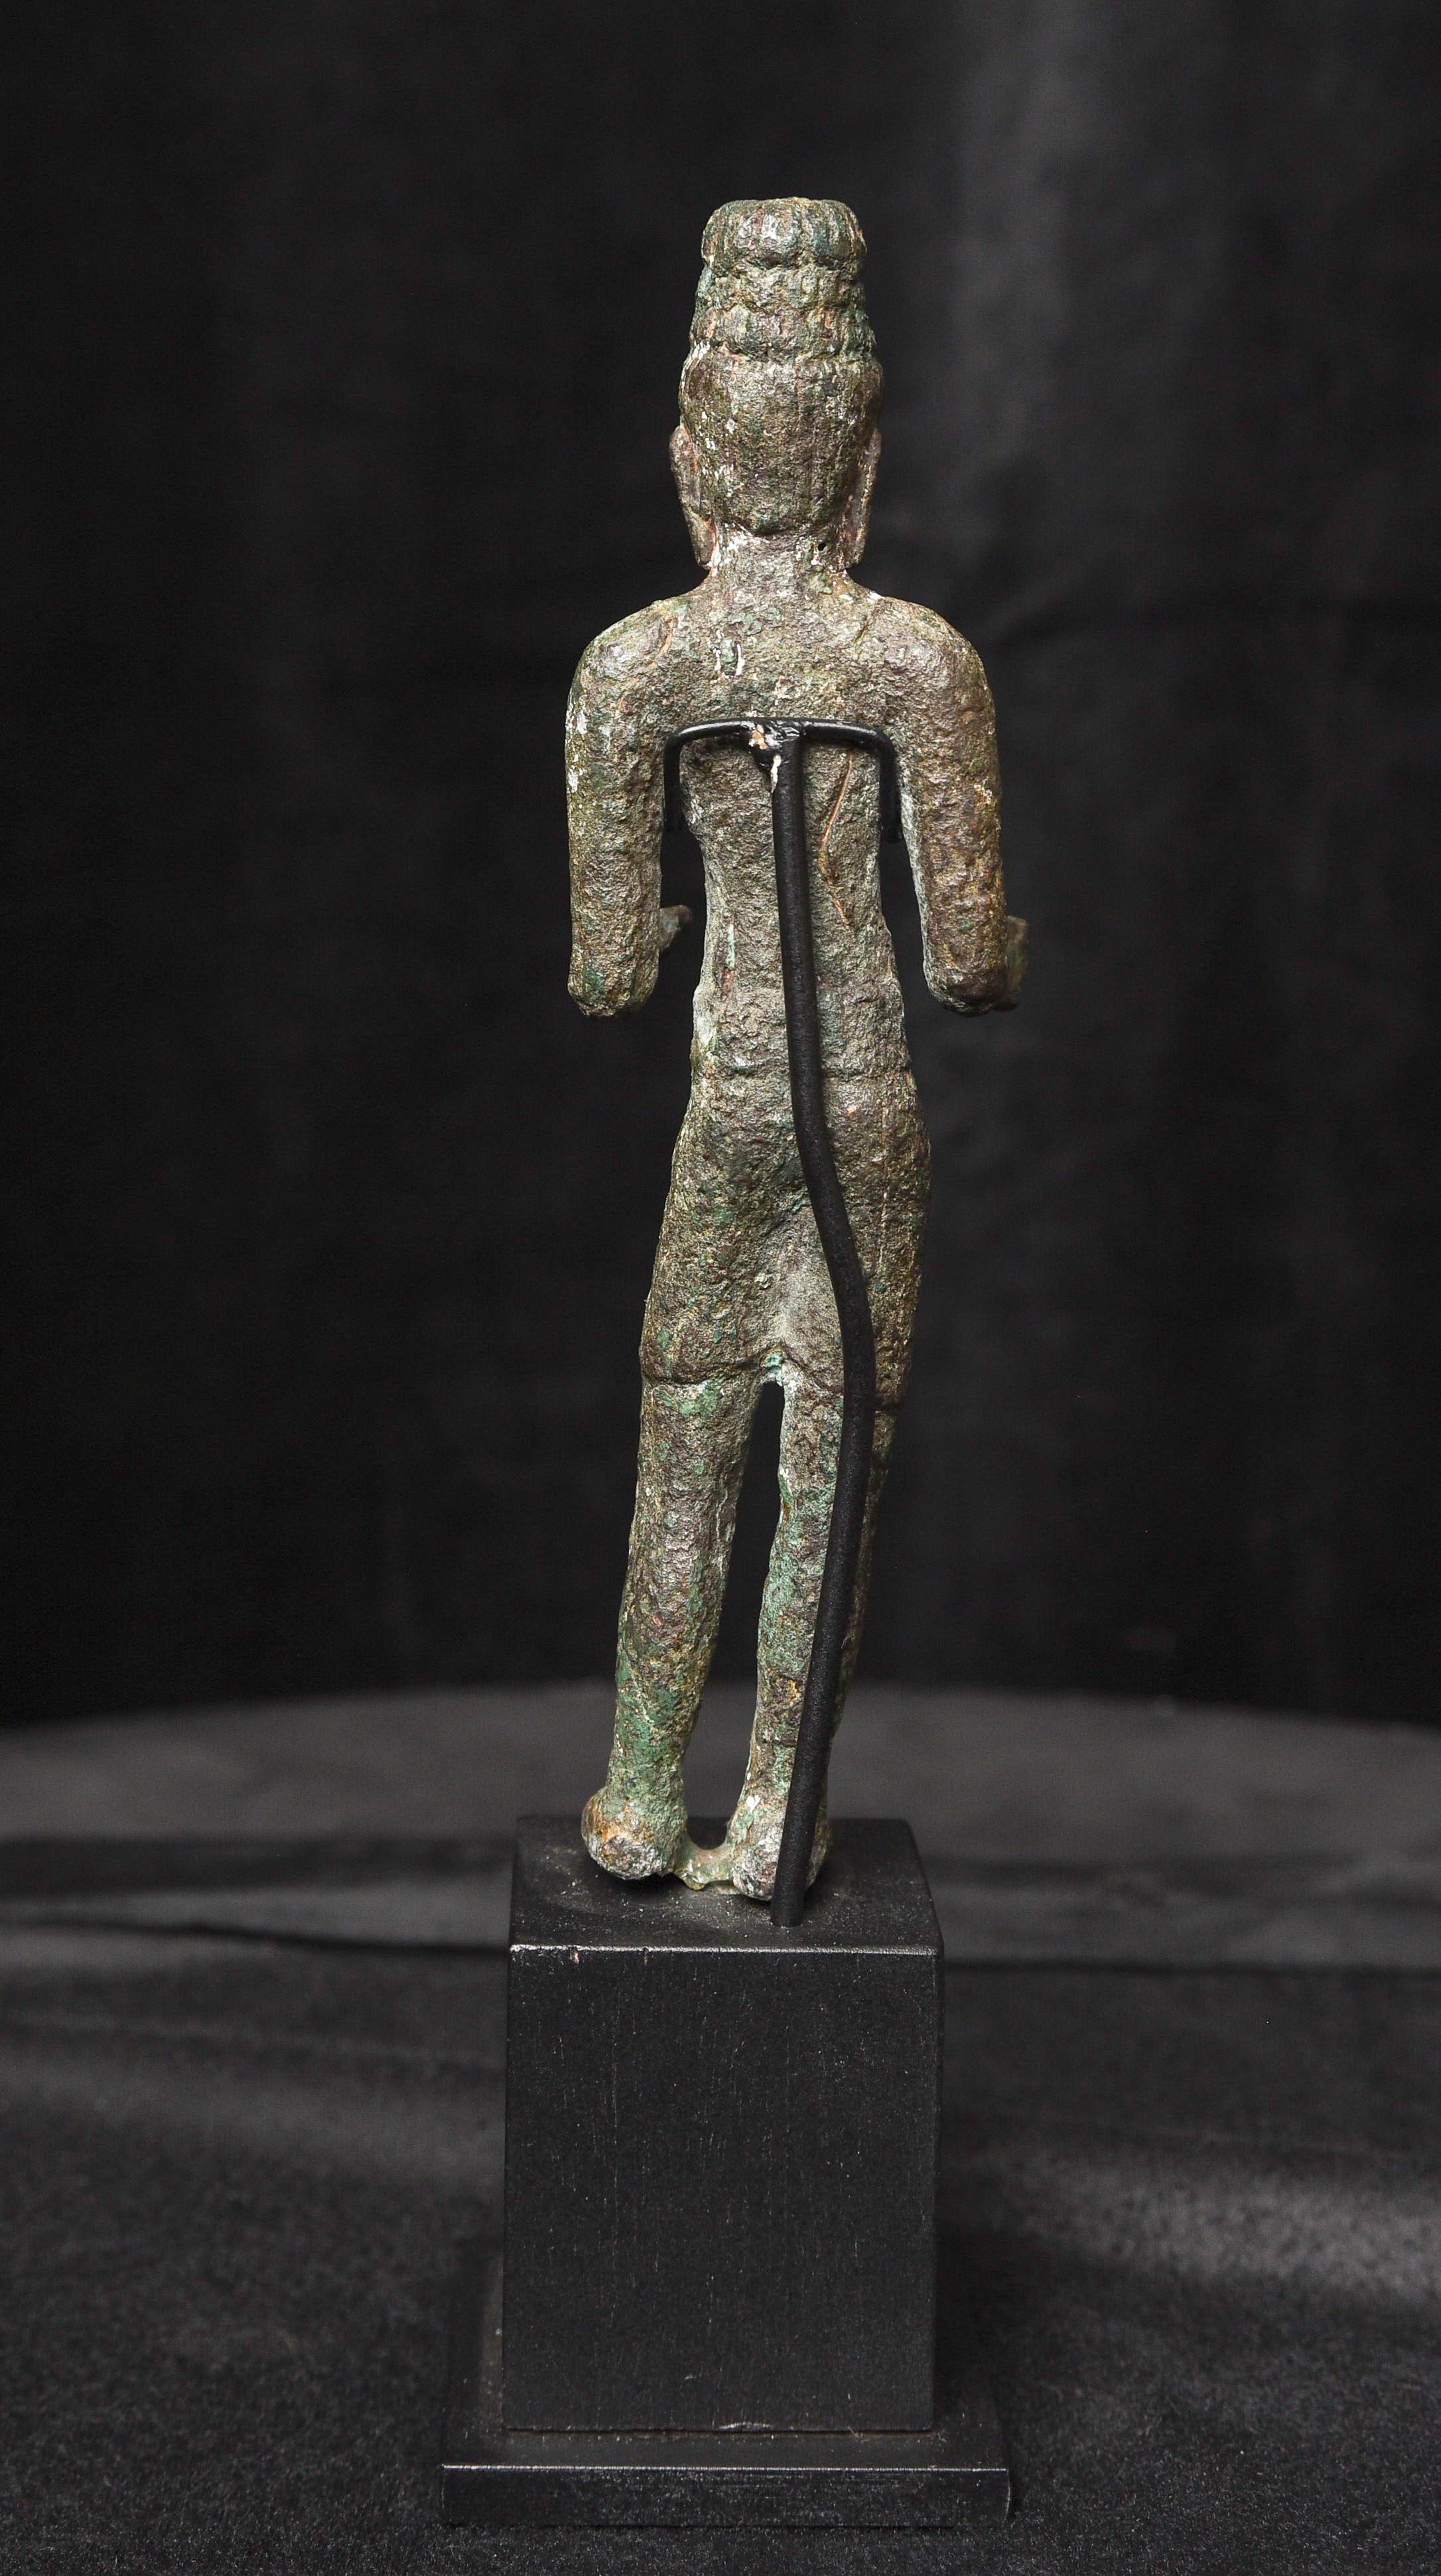 7th/9thC Solid-Cast Bronze Prakhon Chai Buddha or Bodhisattva - 9688 For Sale 2